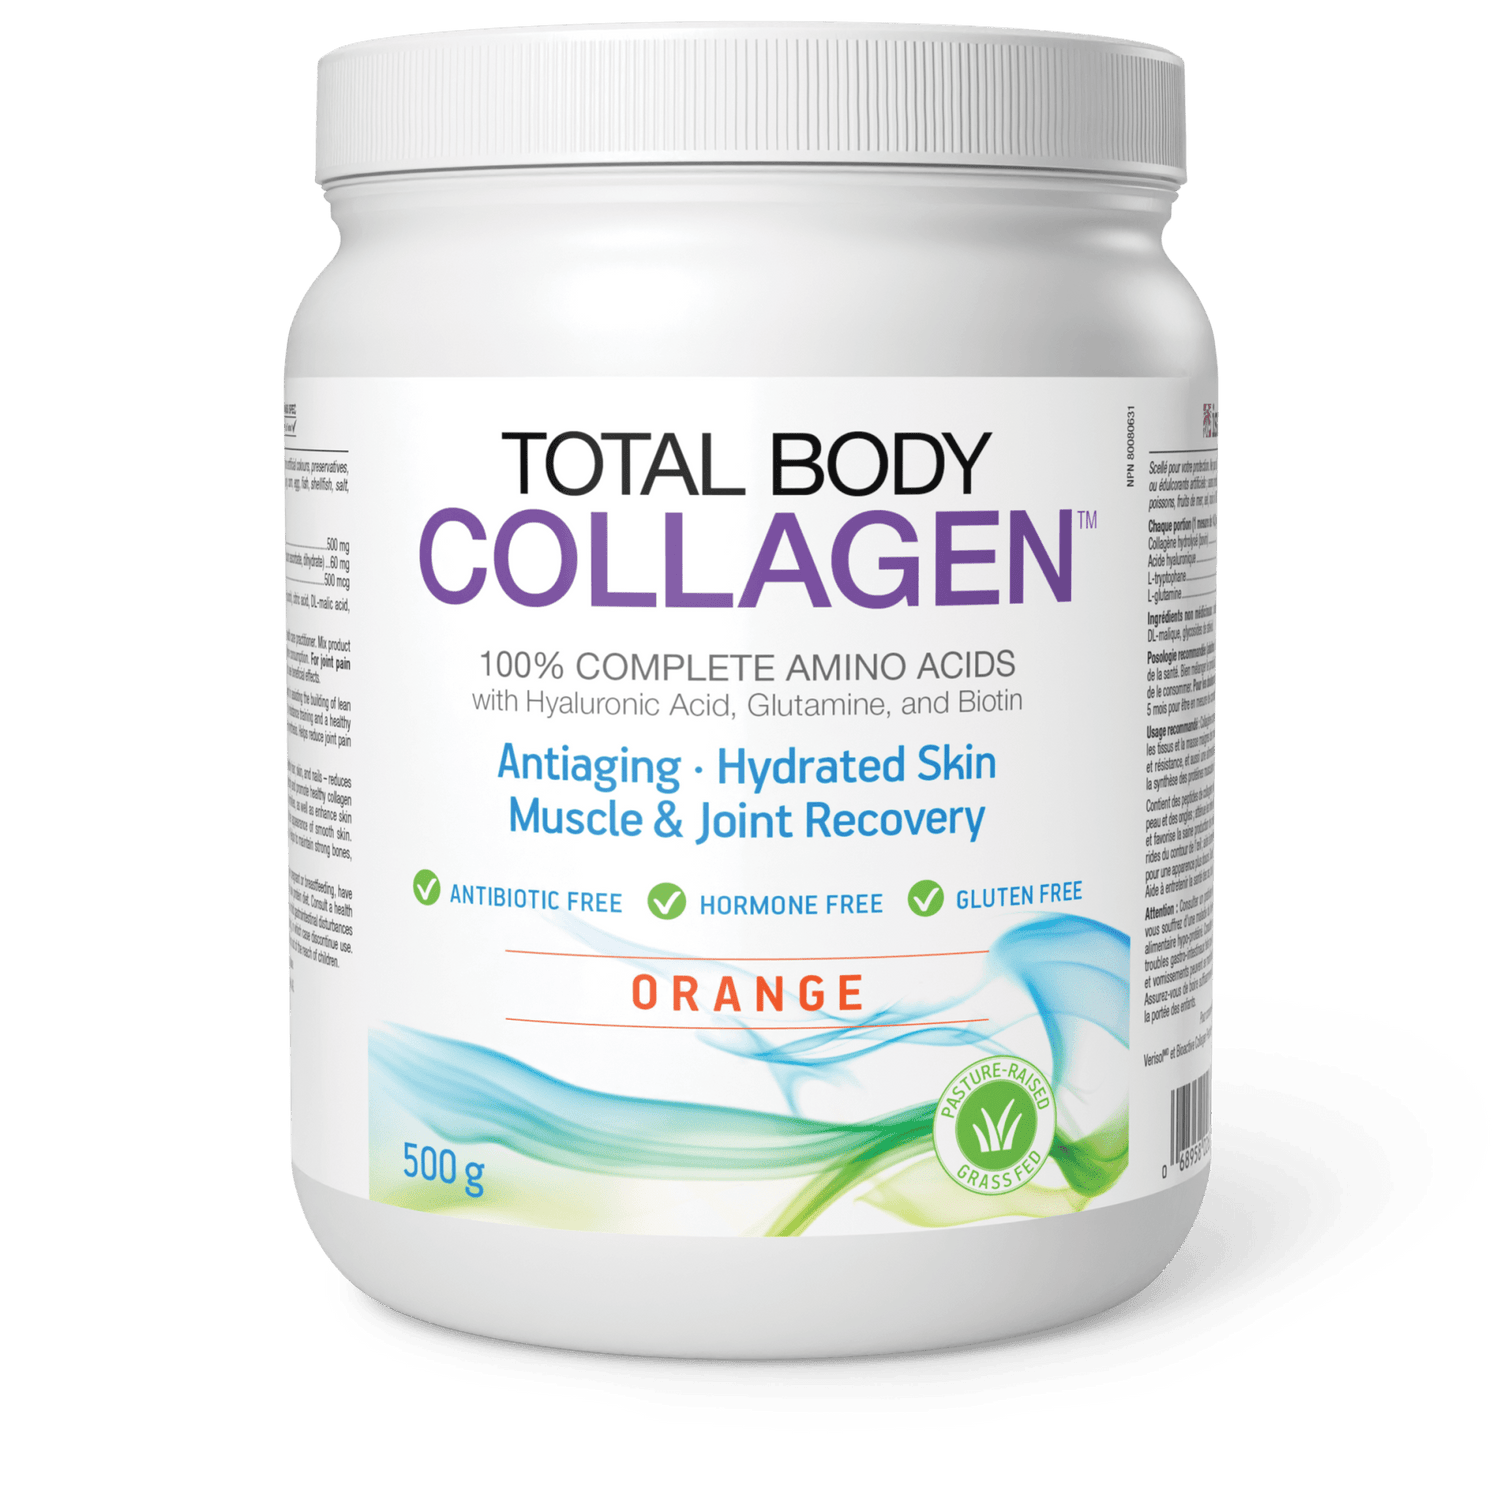 Total Body Collagen, Orange, Total Body Collagen|v|image|2631